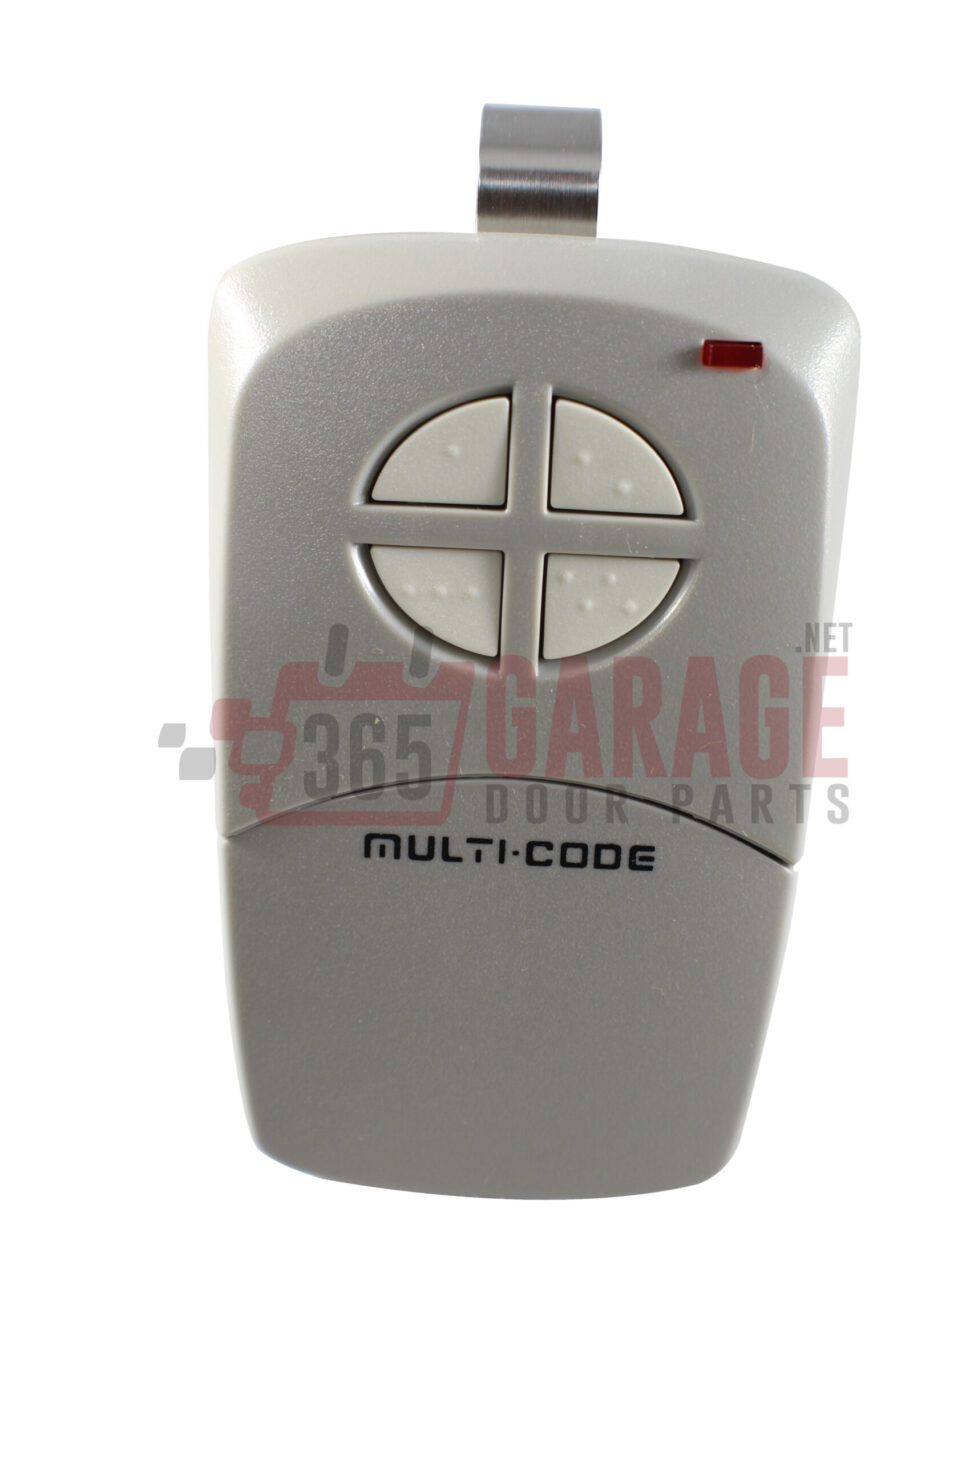 MultiCode 4140 4-Button Visor Gate Garage Remote MultiCode MCS414001 Transmitter 